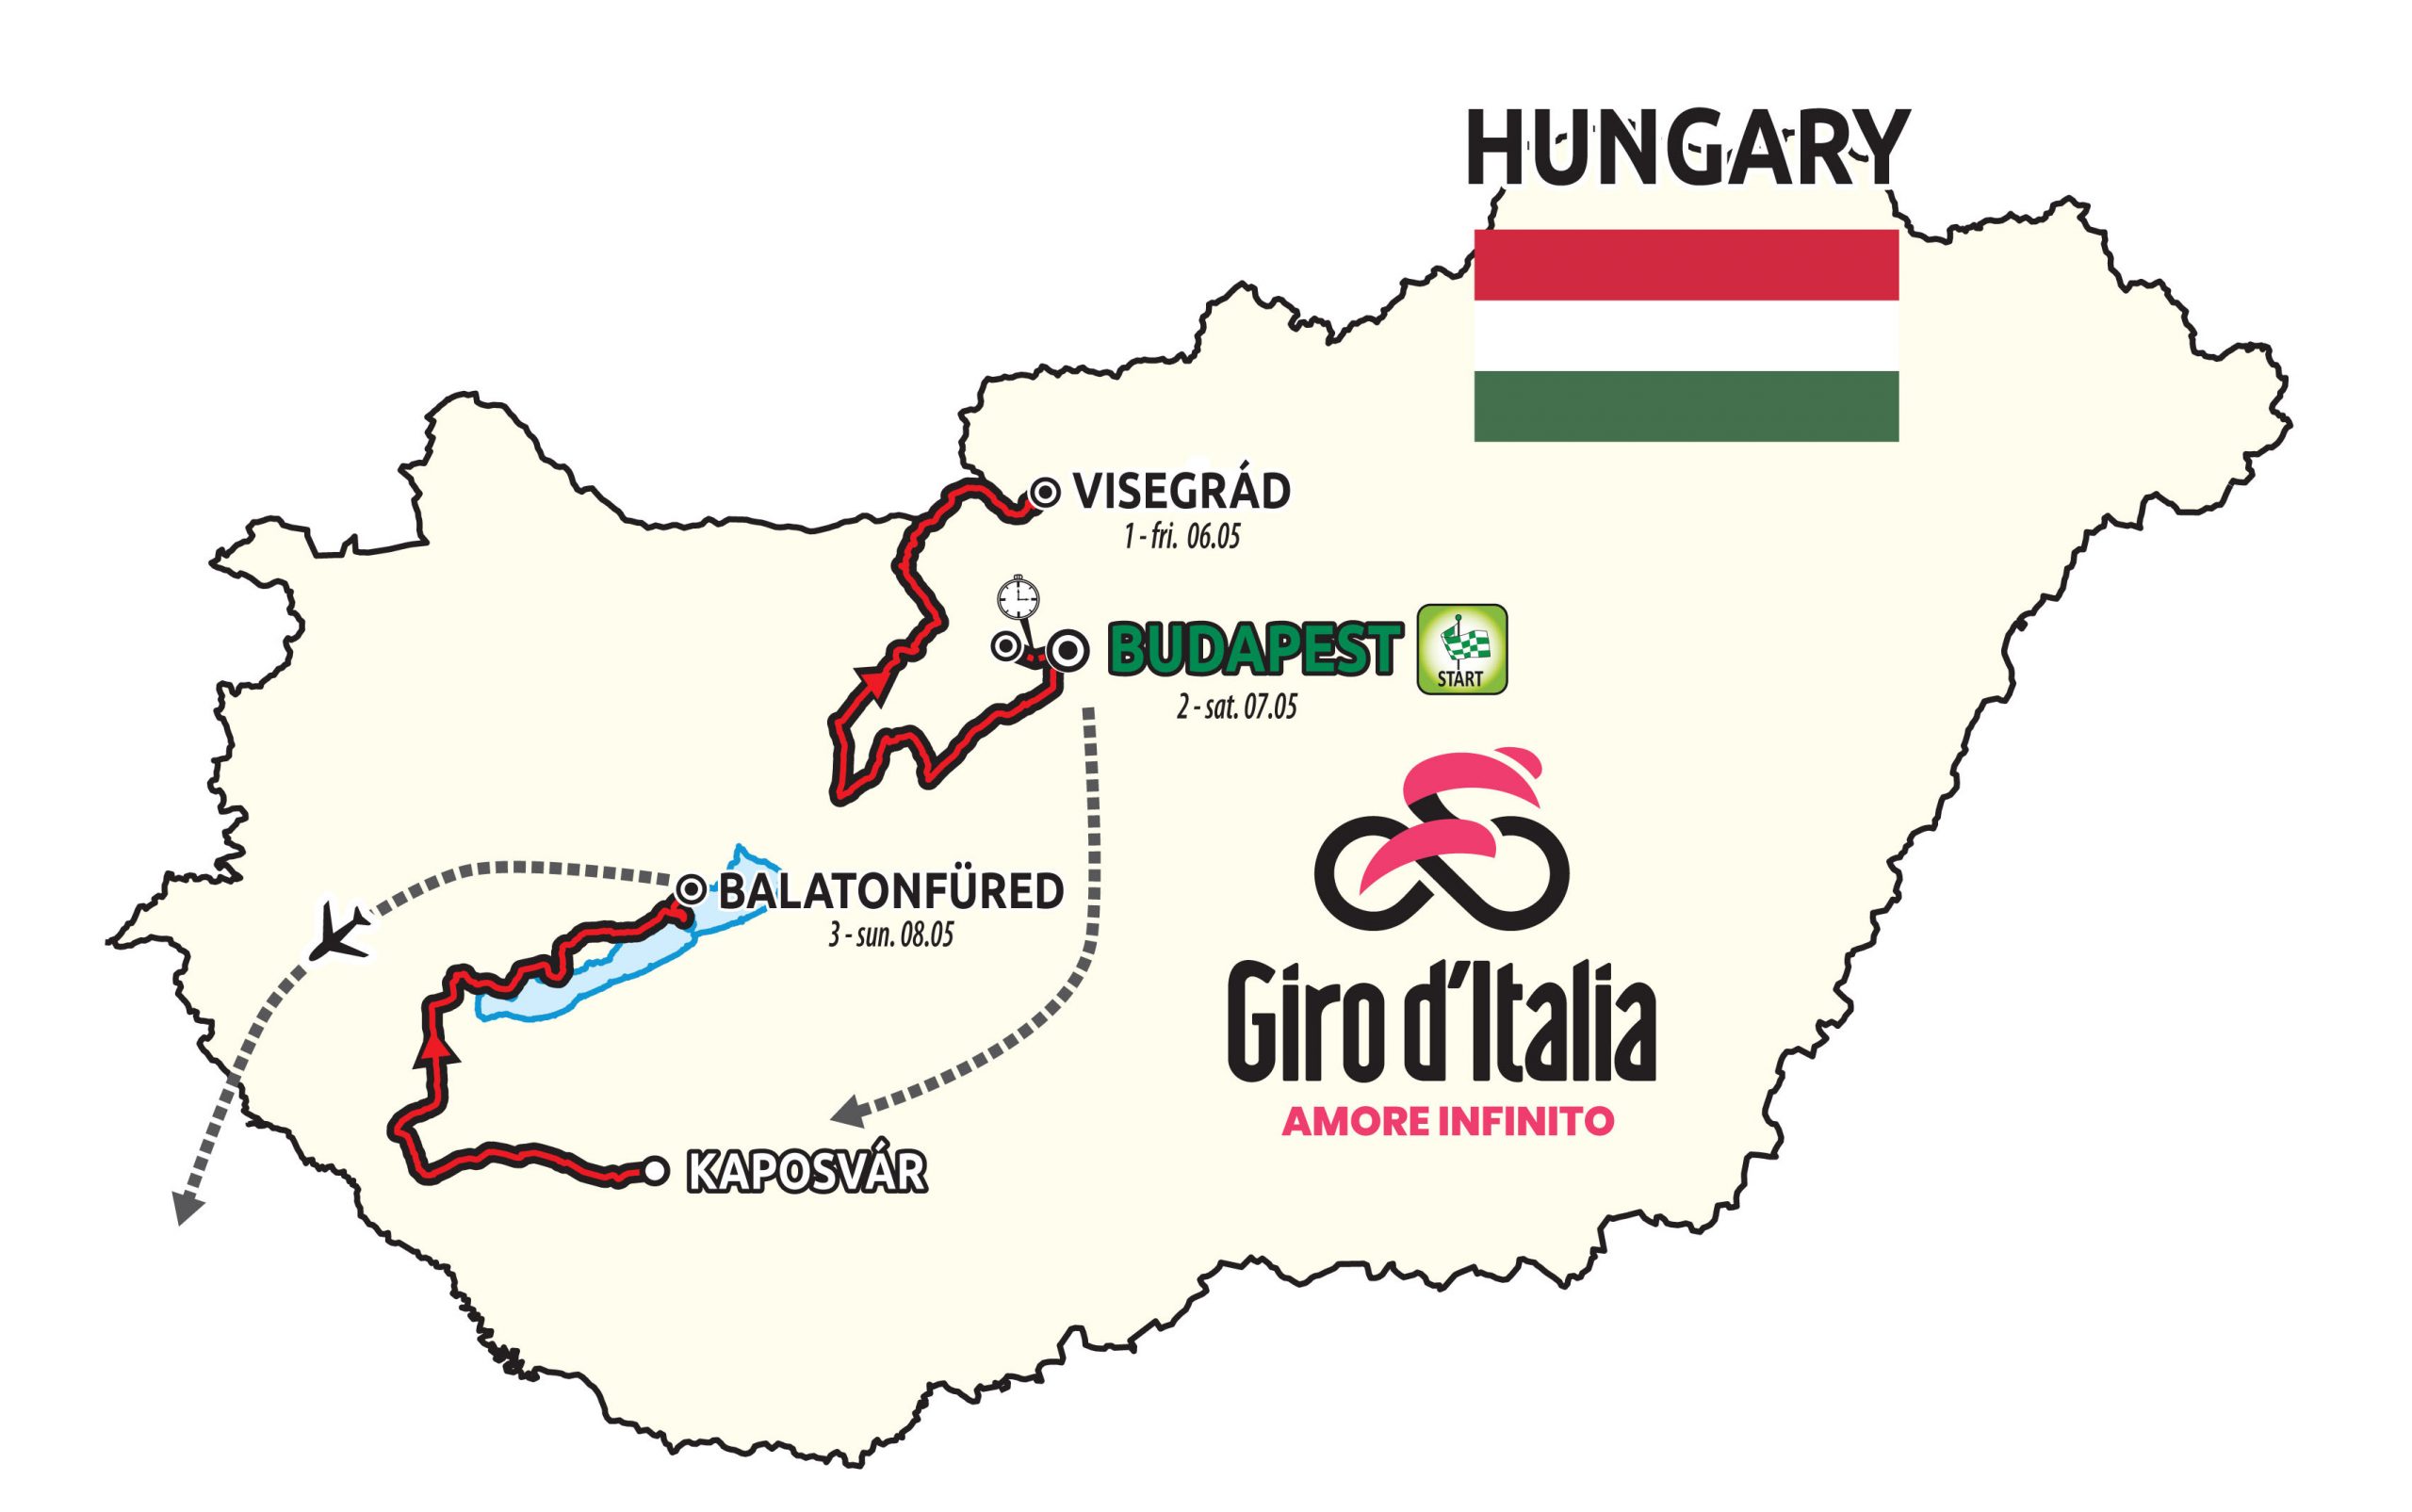 Węgry i Grande Partenza: Giro d’Italia 2022 zawita do Budapesztu